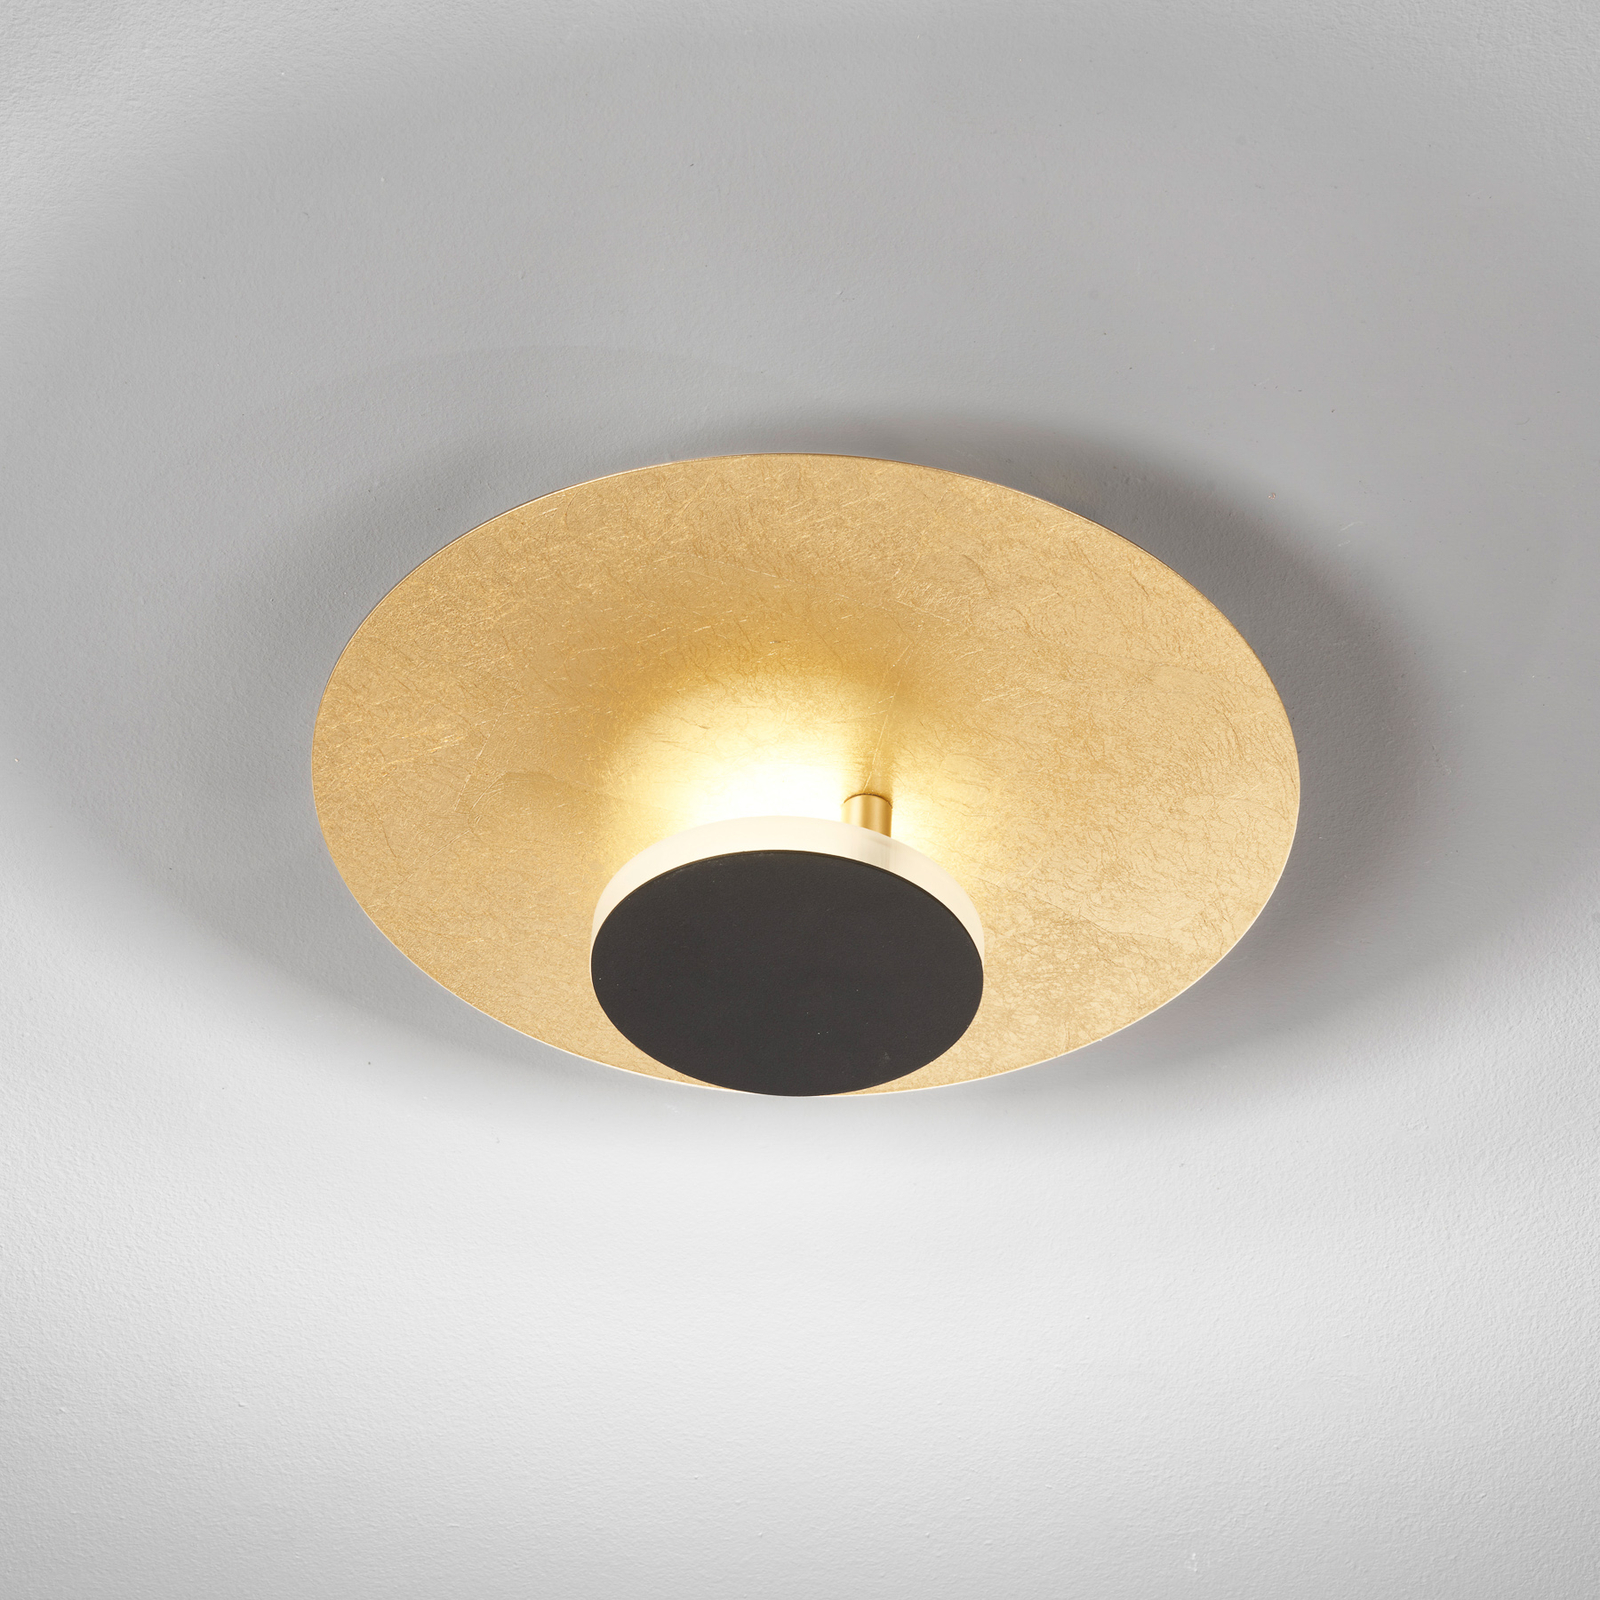 LED plafondlamp Planet indirect Ø30cm goud/zwart